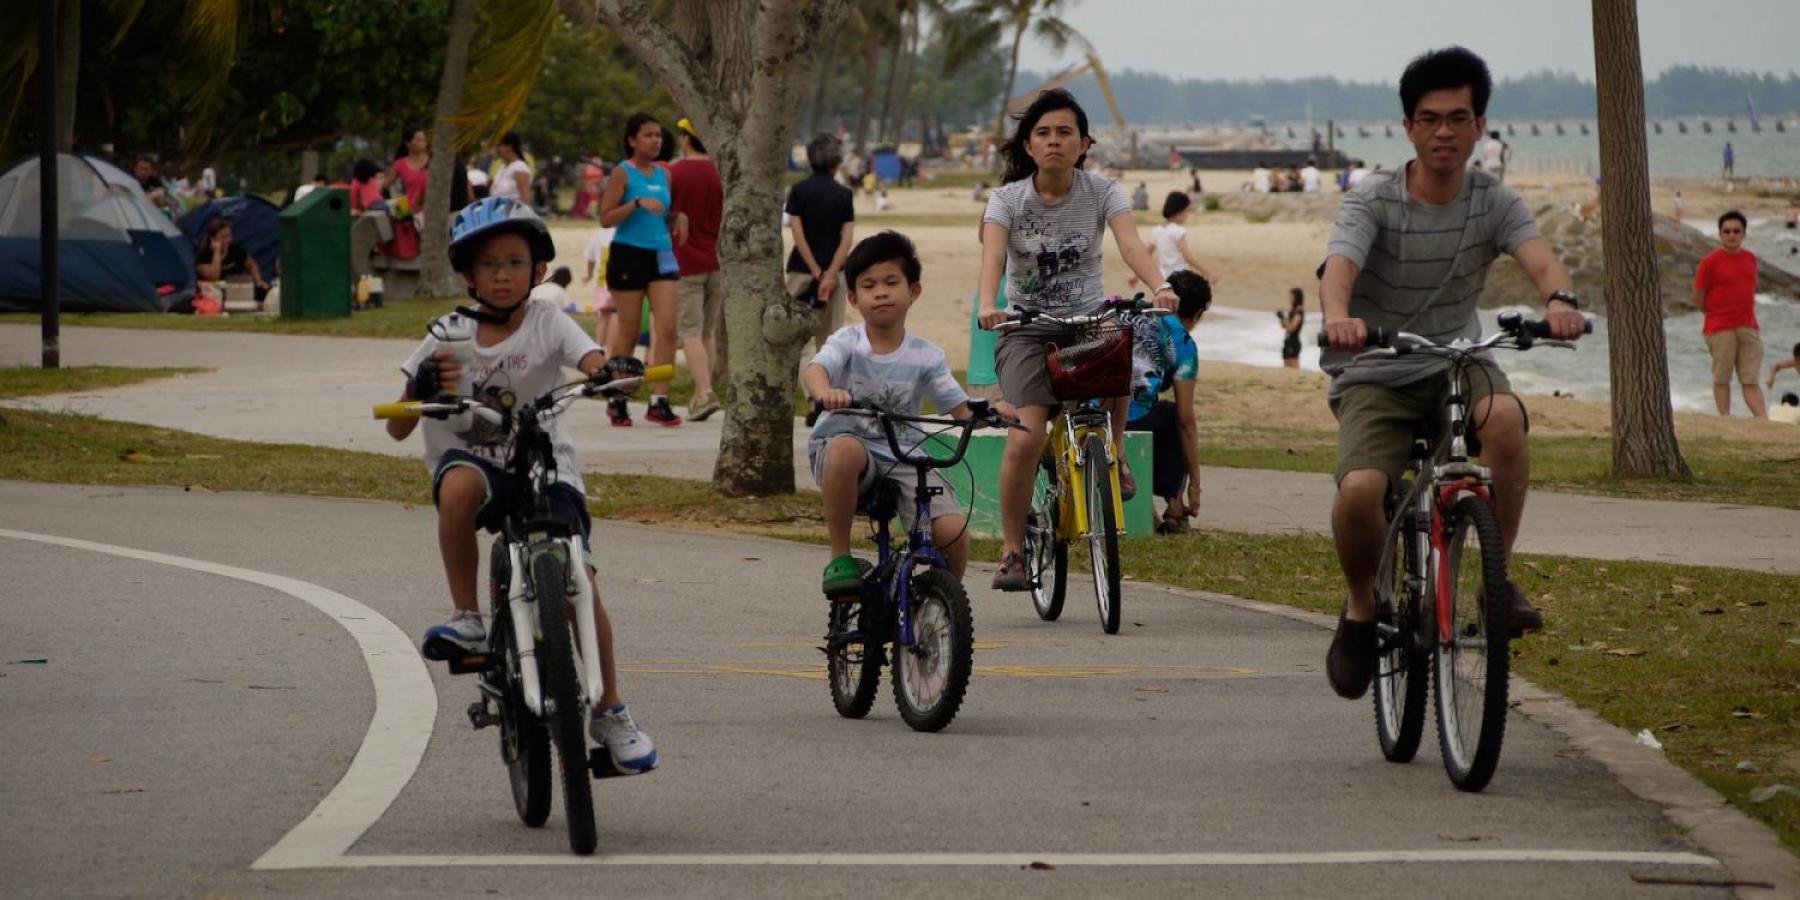 A Singaporean family enjoys a day out at the East Coast Park